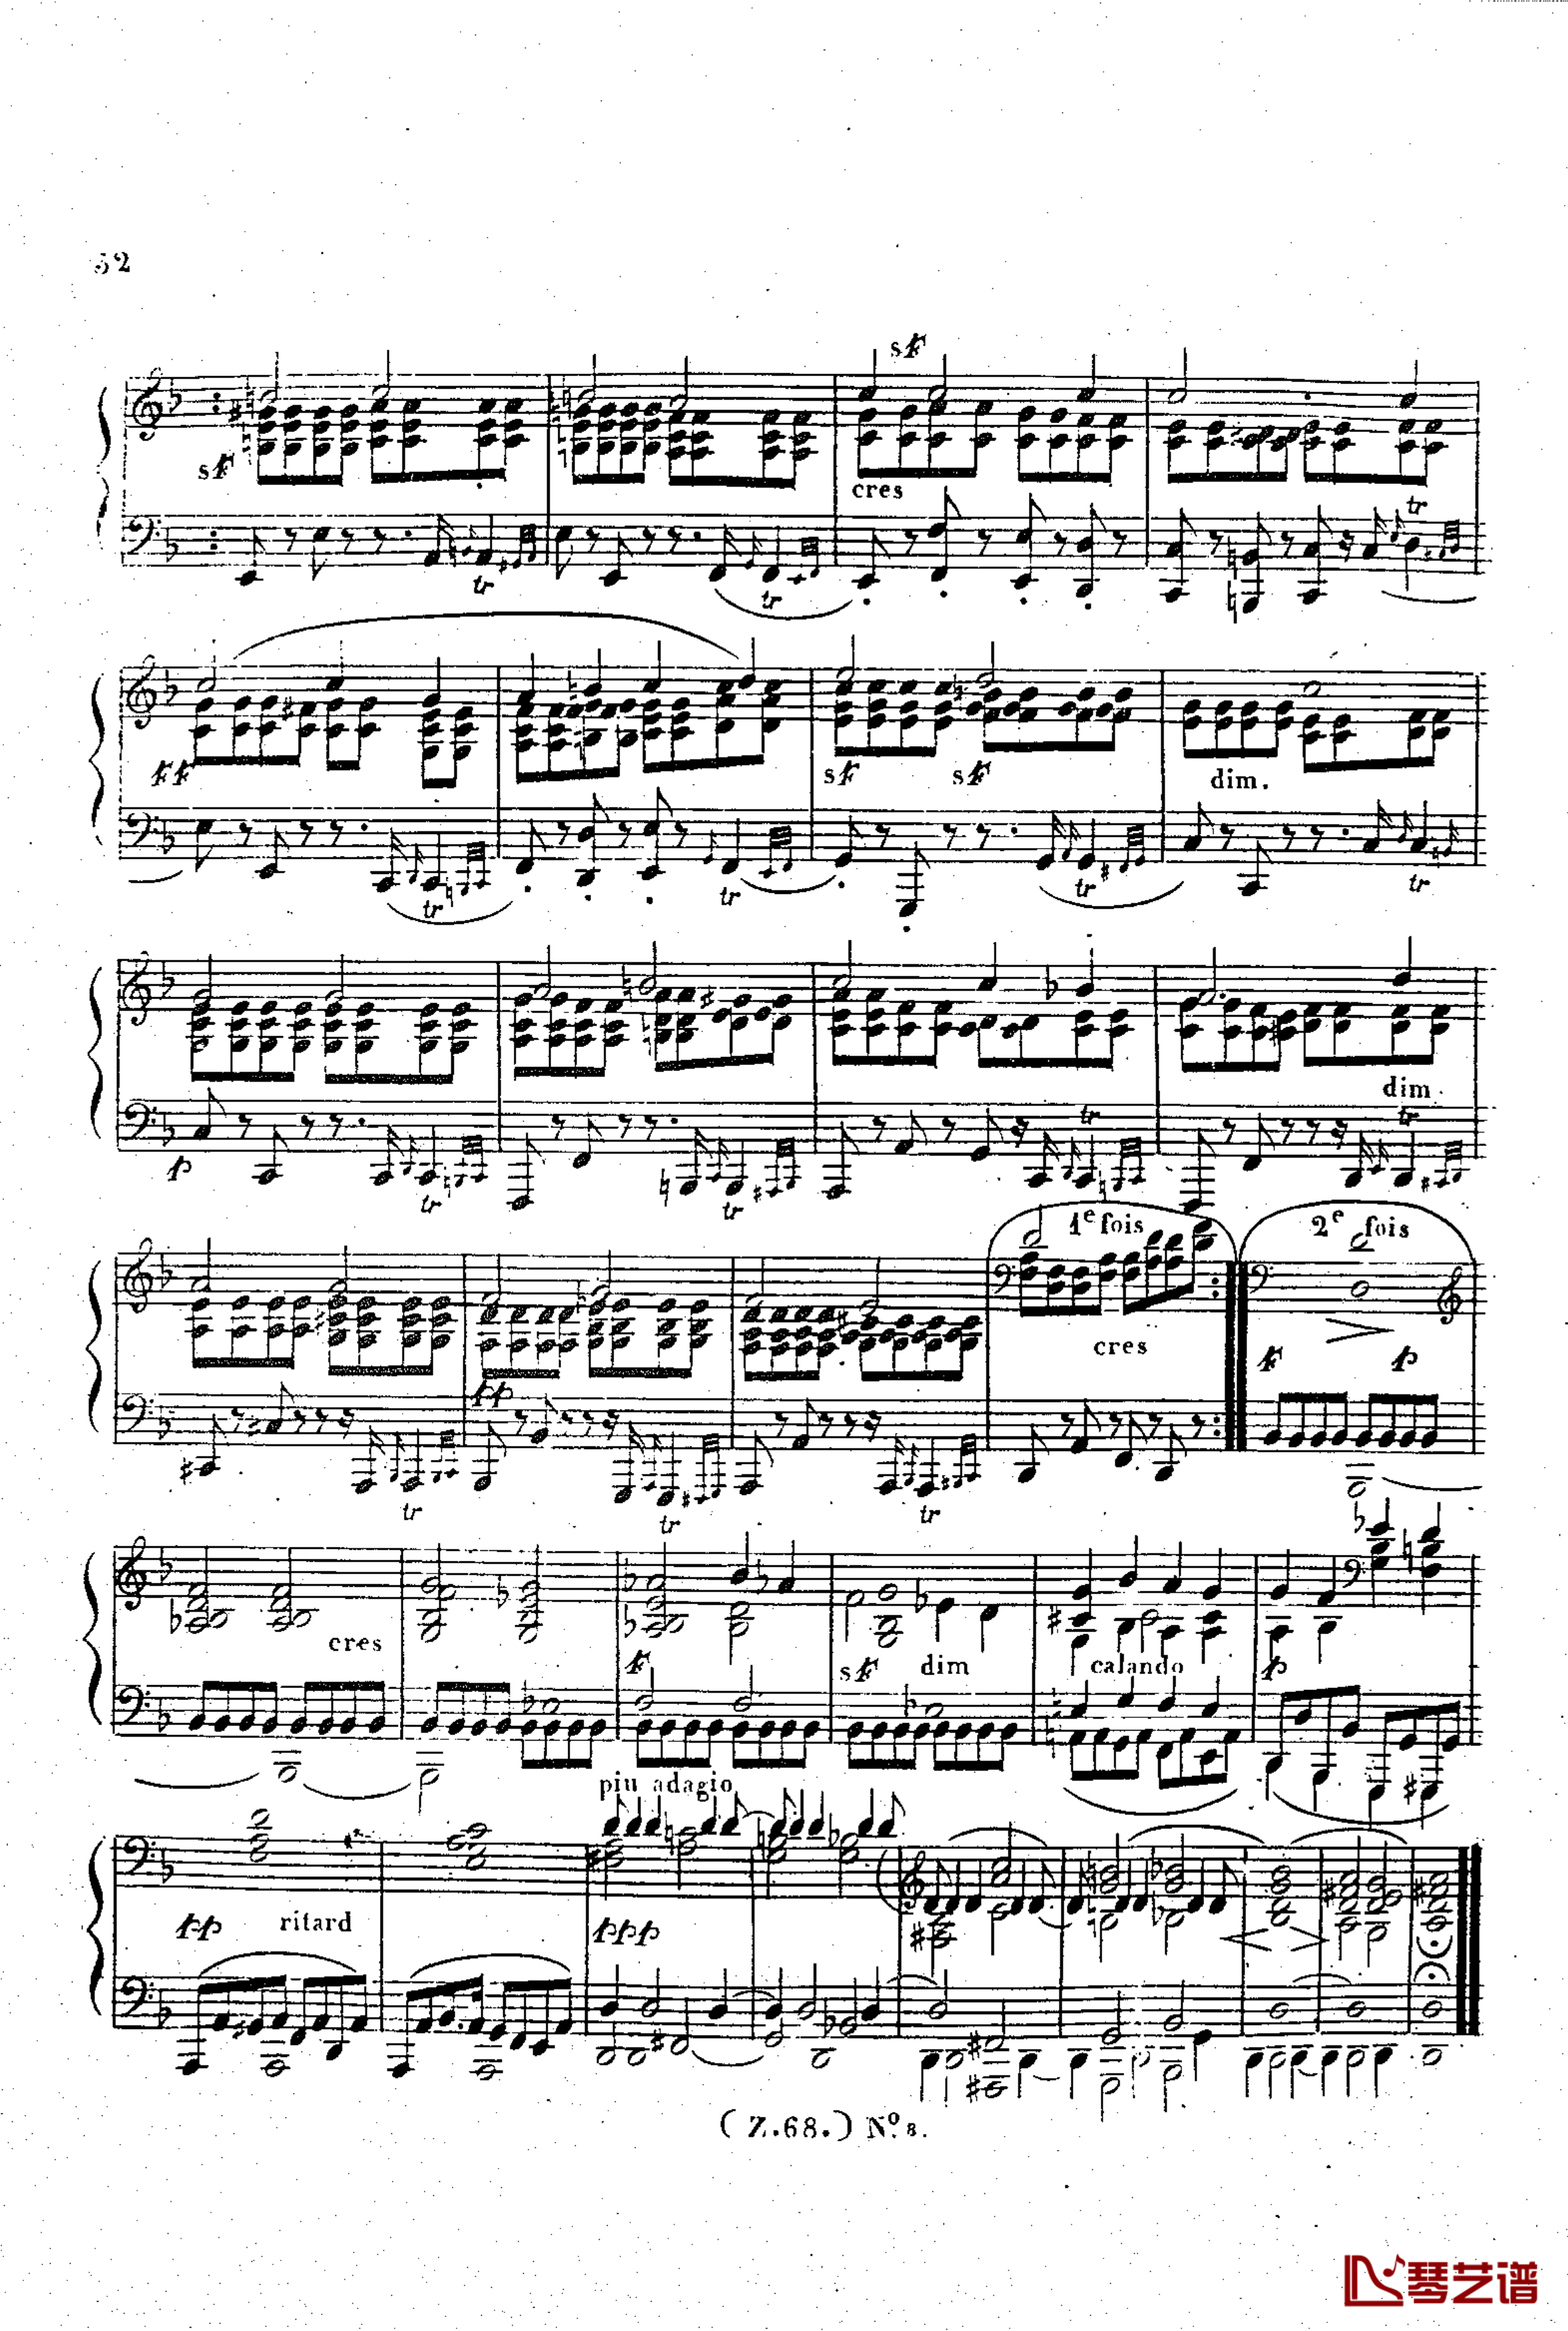  d小调第六钢琴奏鸣曲 Op.124钢琴谱-车尔尼-Czerny33